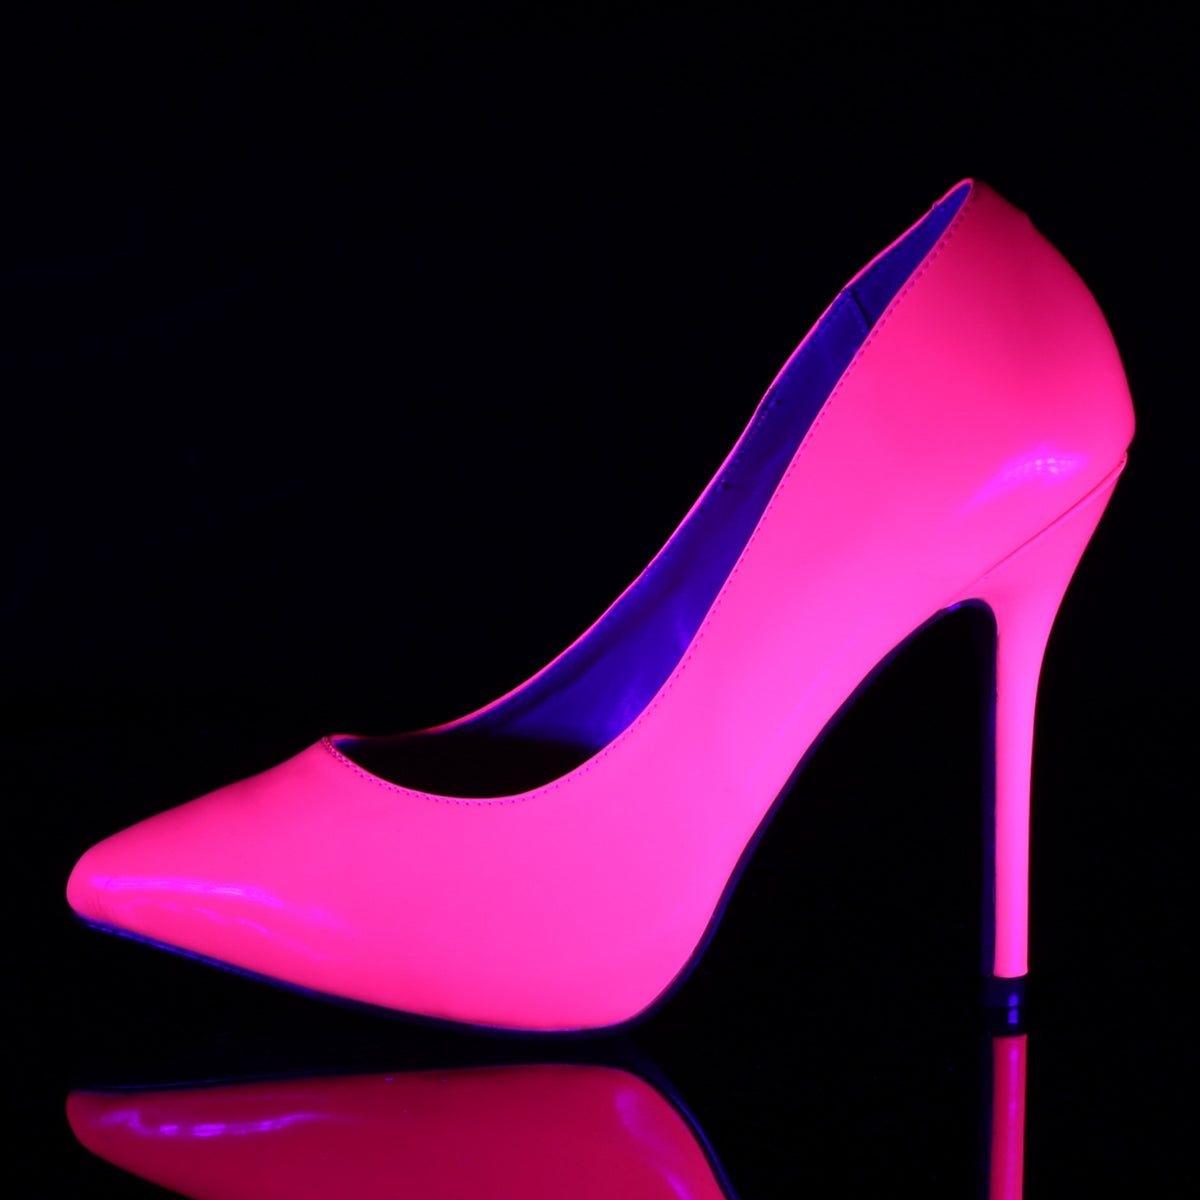 AMUSE-20 Pink Court High Heel